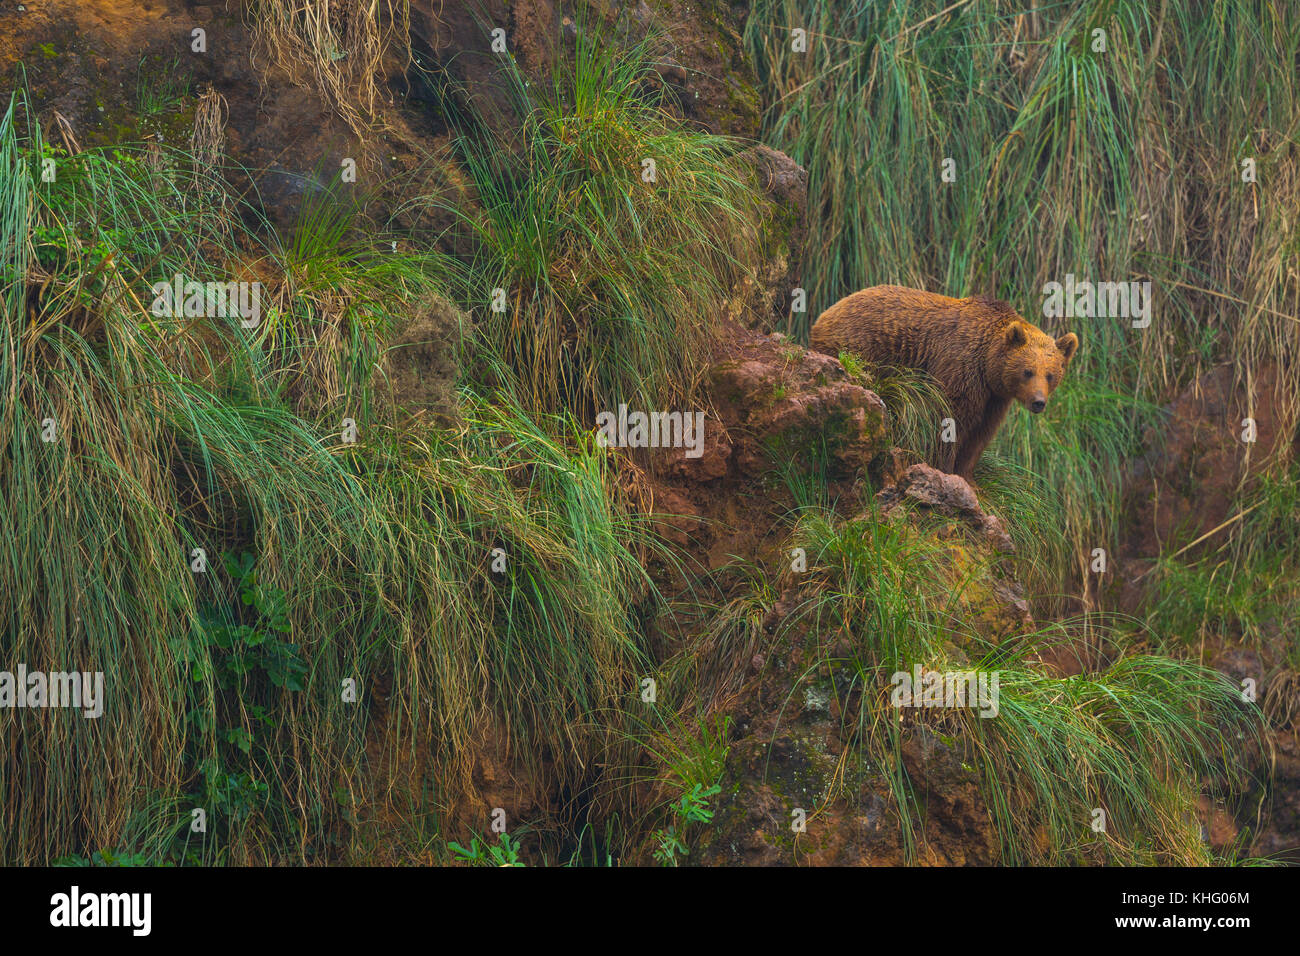 Brown bear (Ursus arctos), Cabarceno Natural Park, Cantabria, Spain, Europe Stock Photo